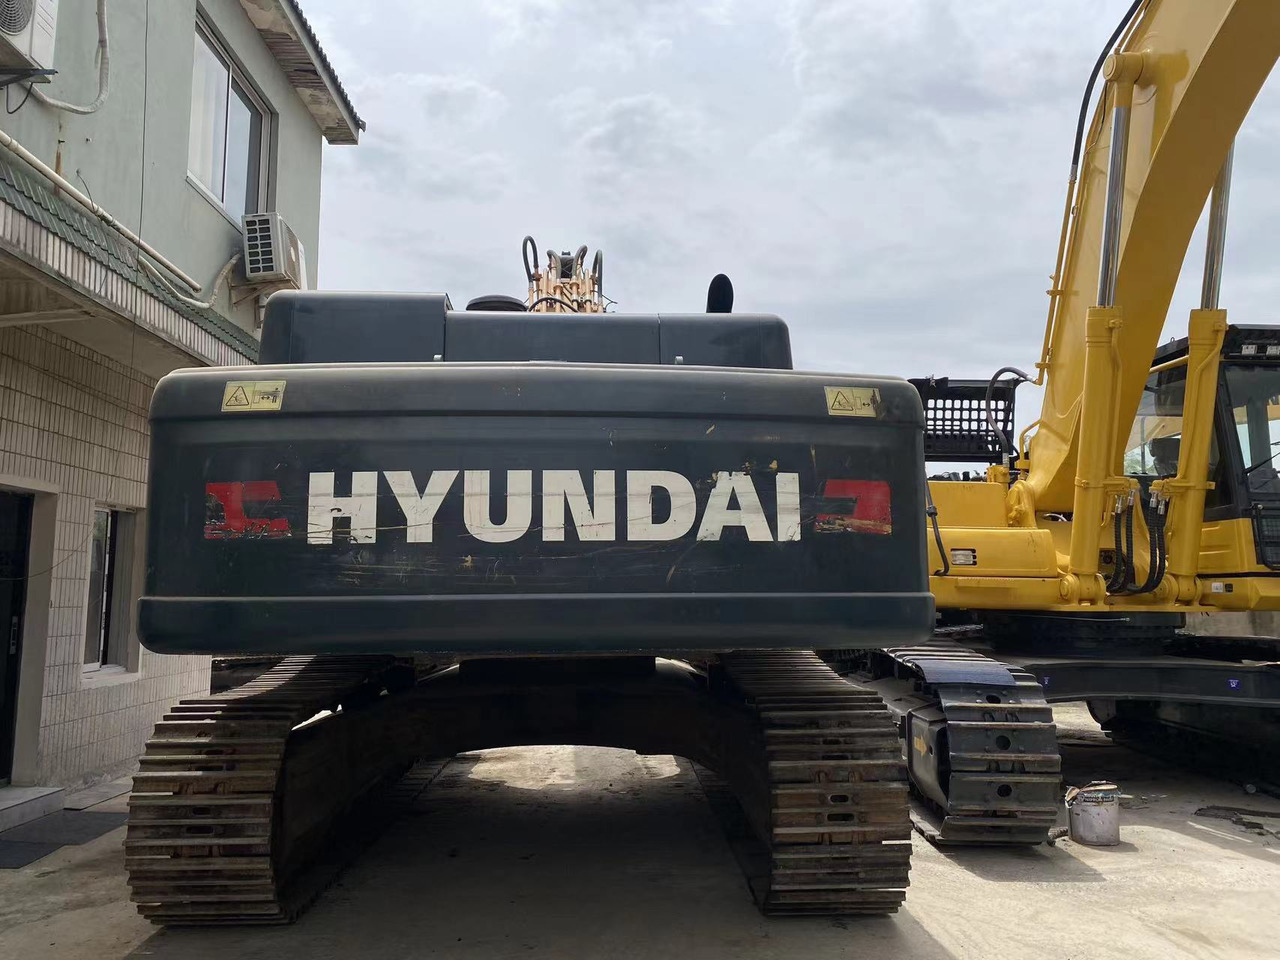 Crawler excavator Korea made HYUNDAI used excavator good condition R485LVS best service on sale: picture 3